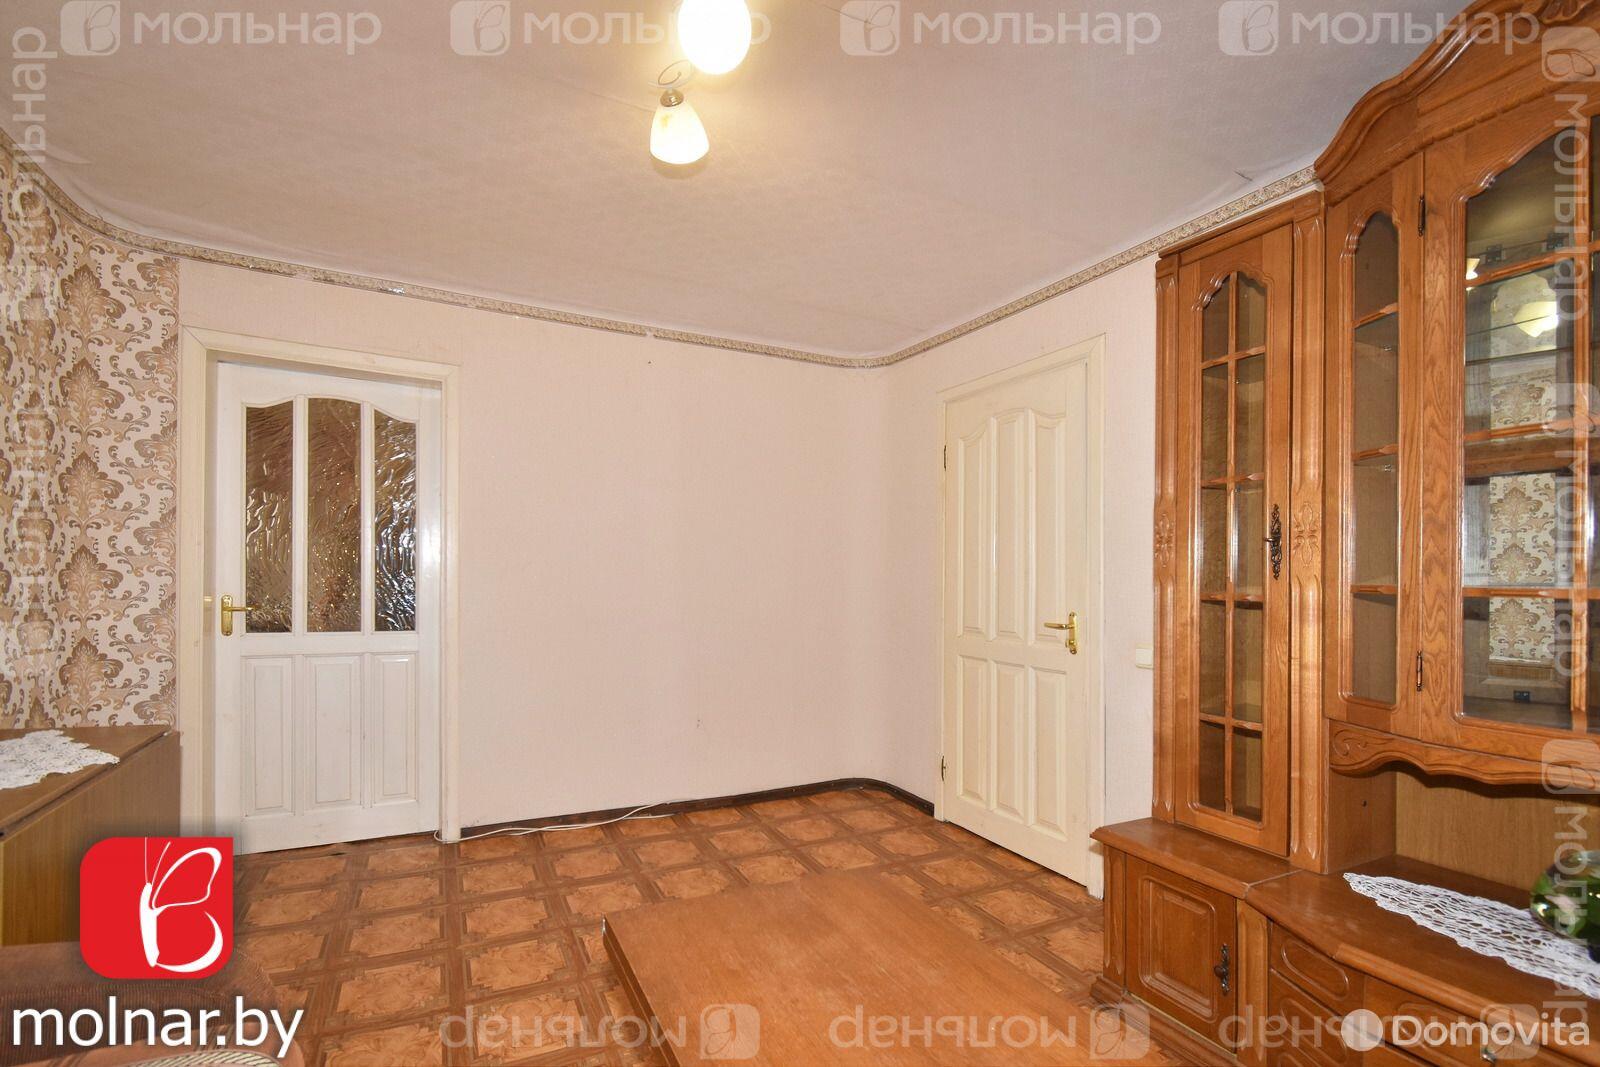 квартира, Минск, ул. Одинцова, д. 53, стоимость продажи 235 951 р.